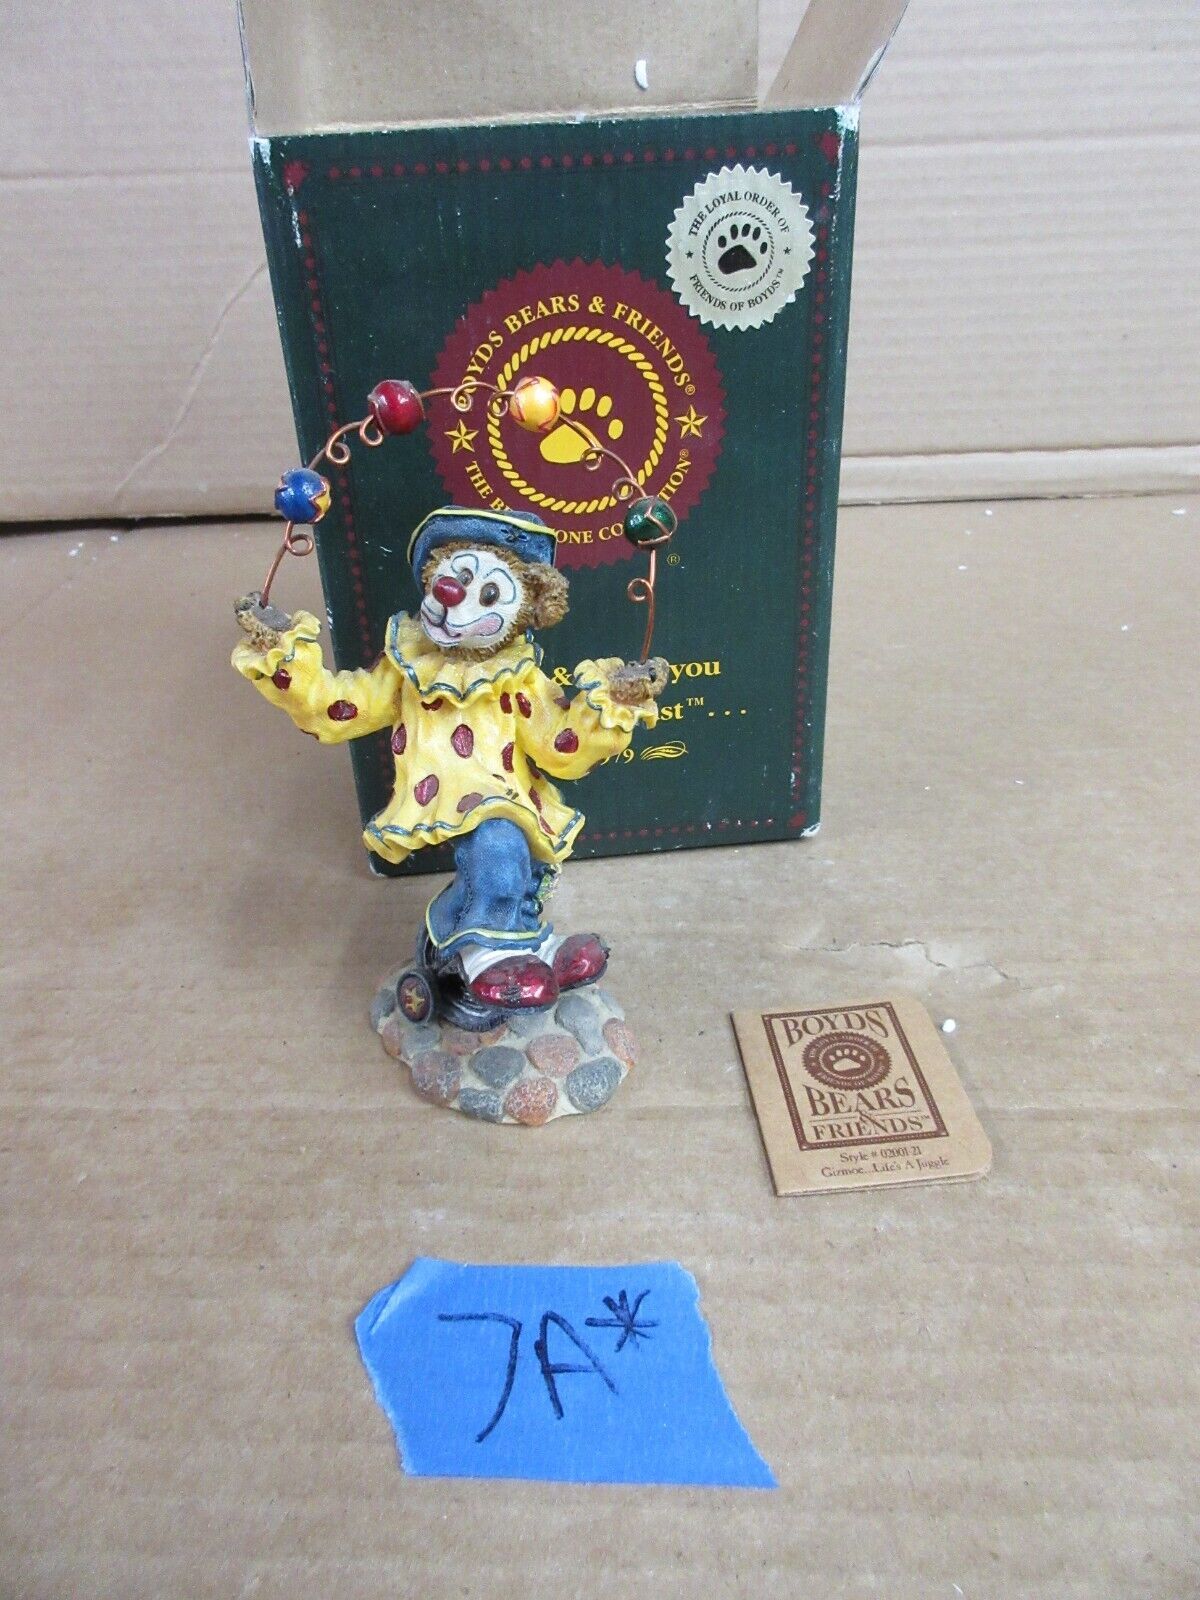 Boyds Bears Gizmoe Life's a Juggle 02001-21 Bearstone Collection Clown Figurine - $36.12